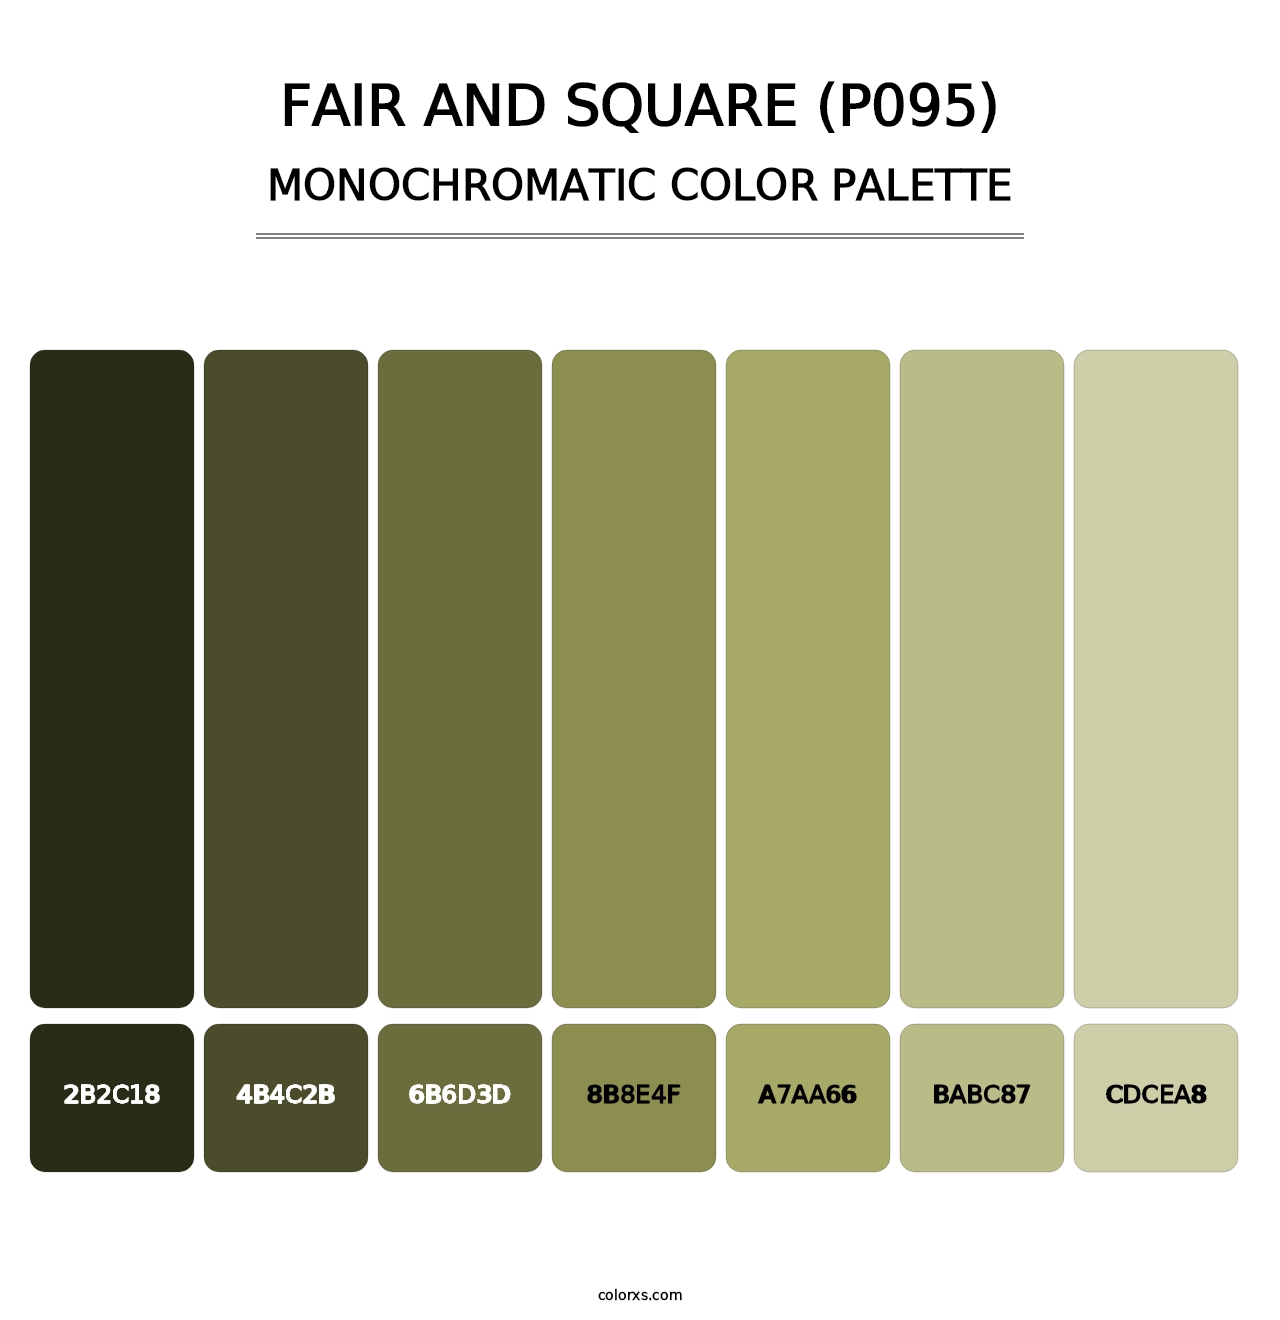 Fair and Square (P095) - Monochromatic Color Palette